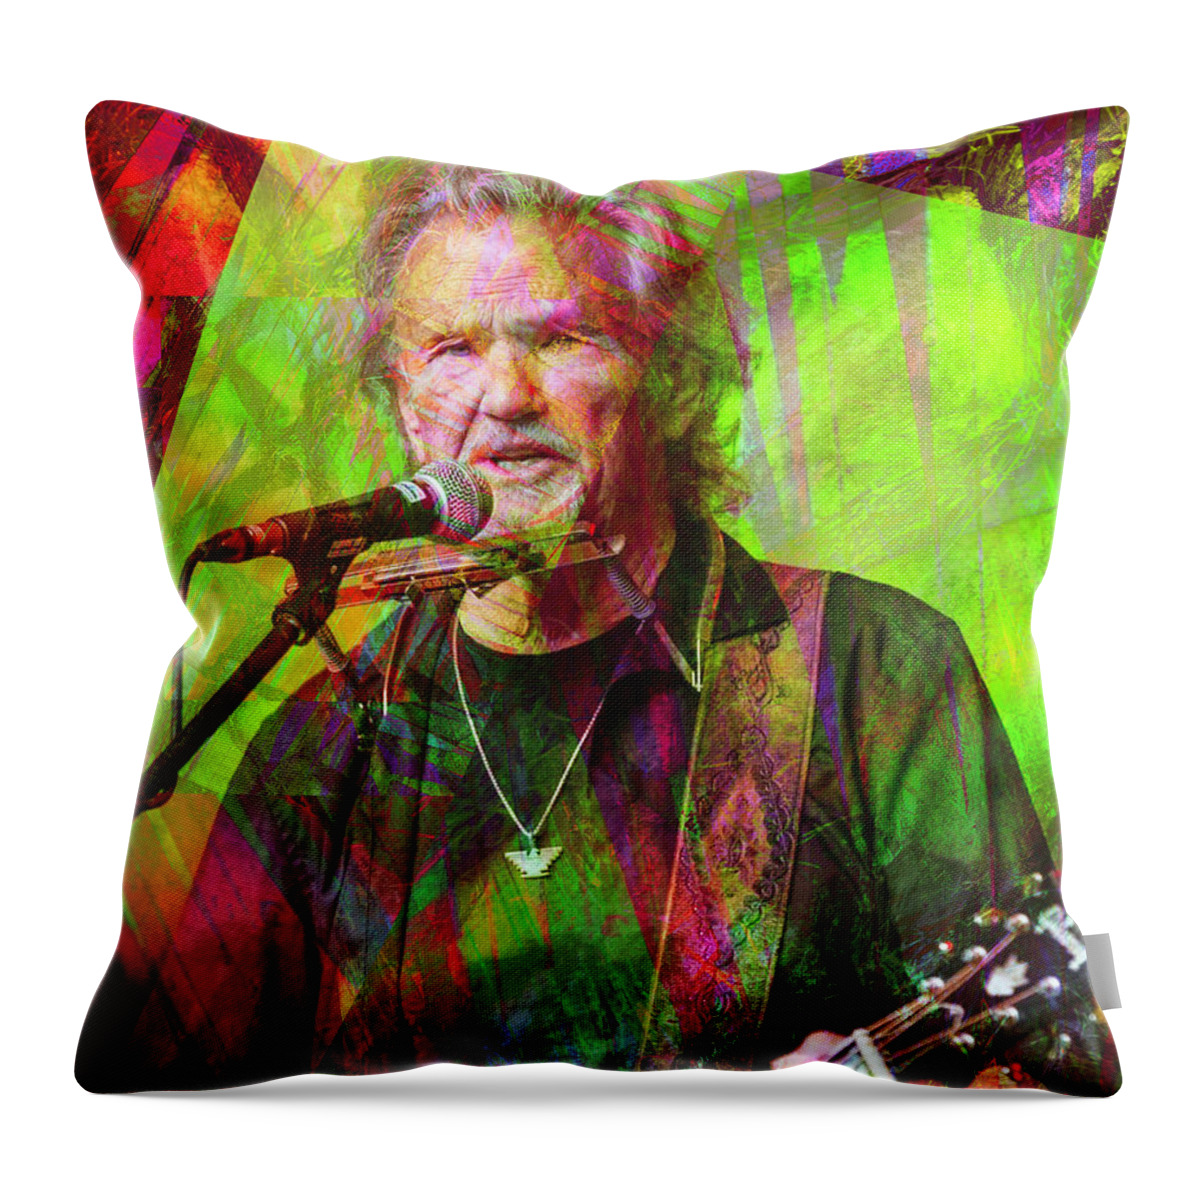 Kris Kristofferson Throw Pillow featuring the digital art Kris Kristofferson by Rob Hemphill